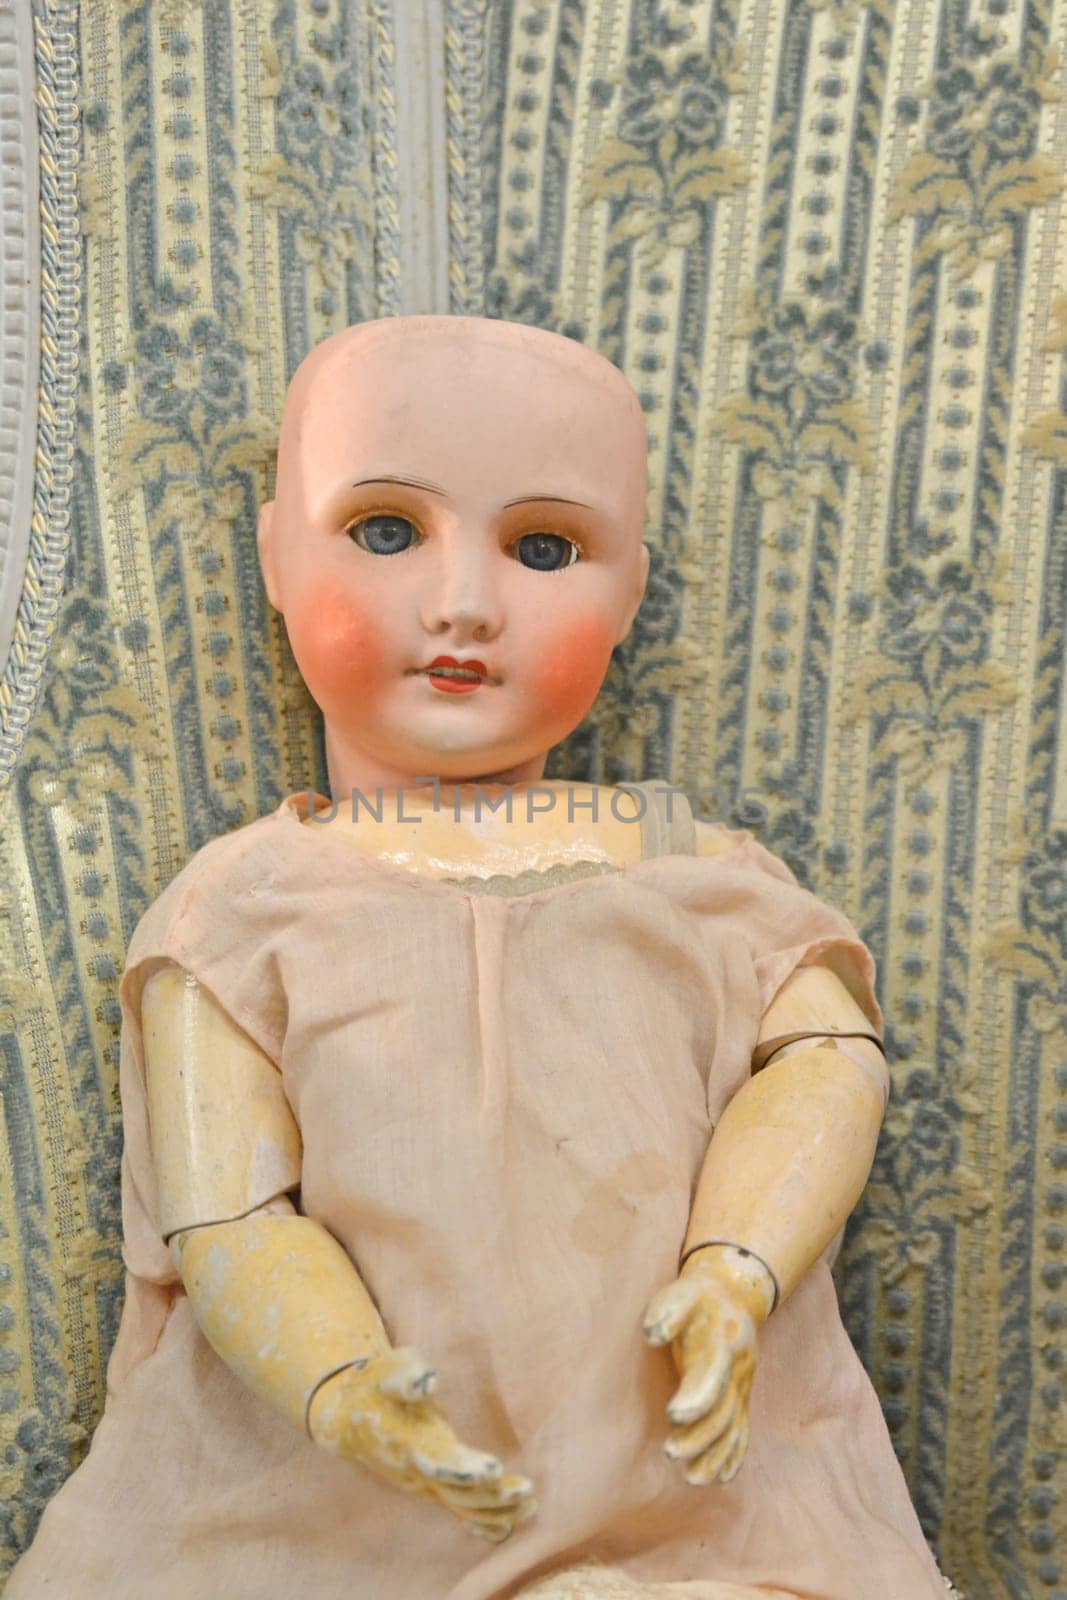 Flea market. Old vintage doll by Godi